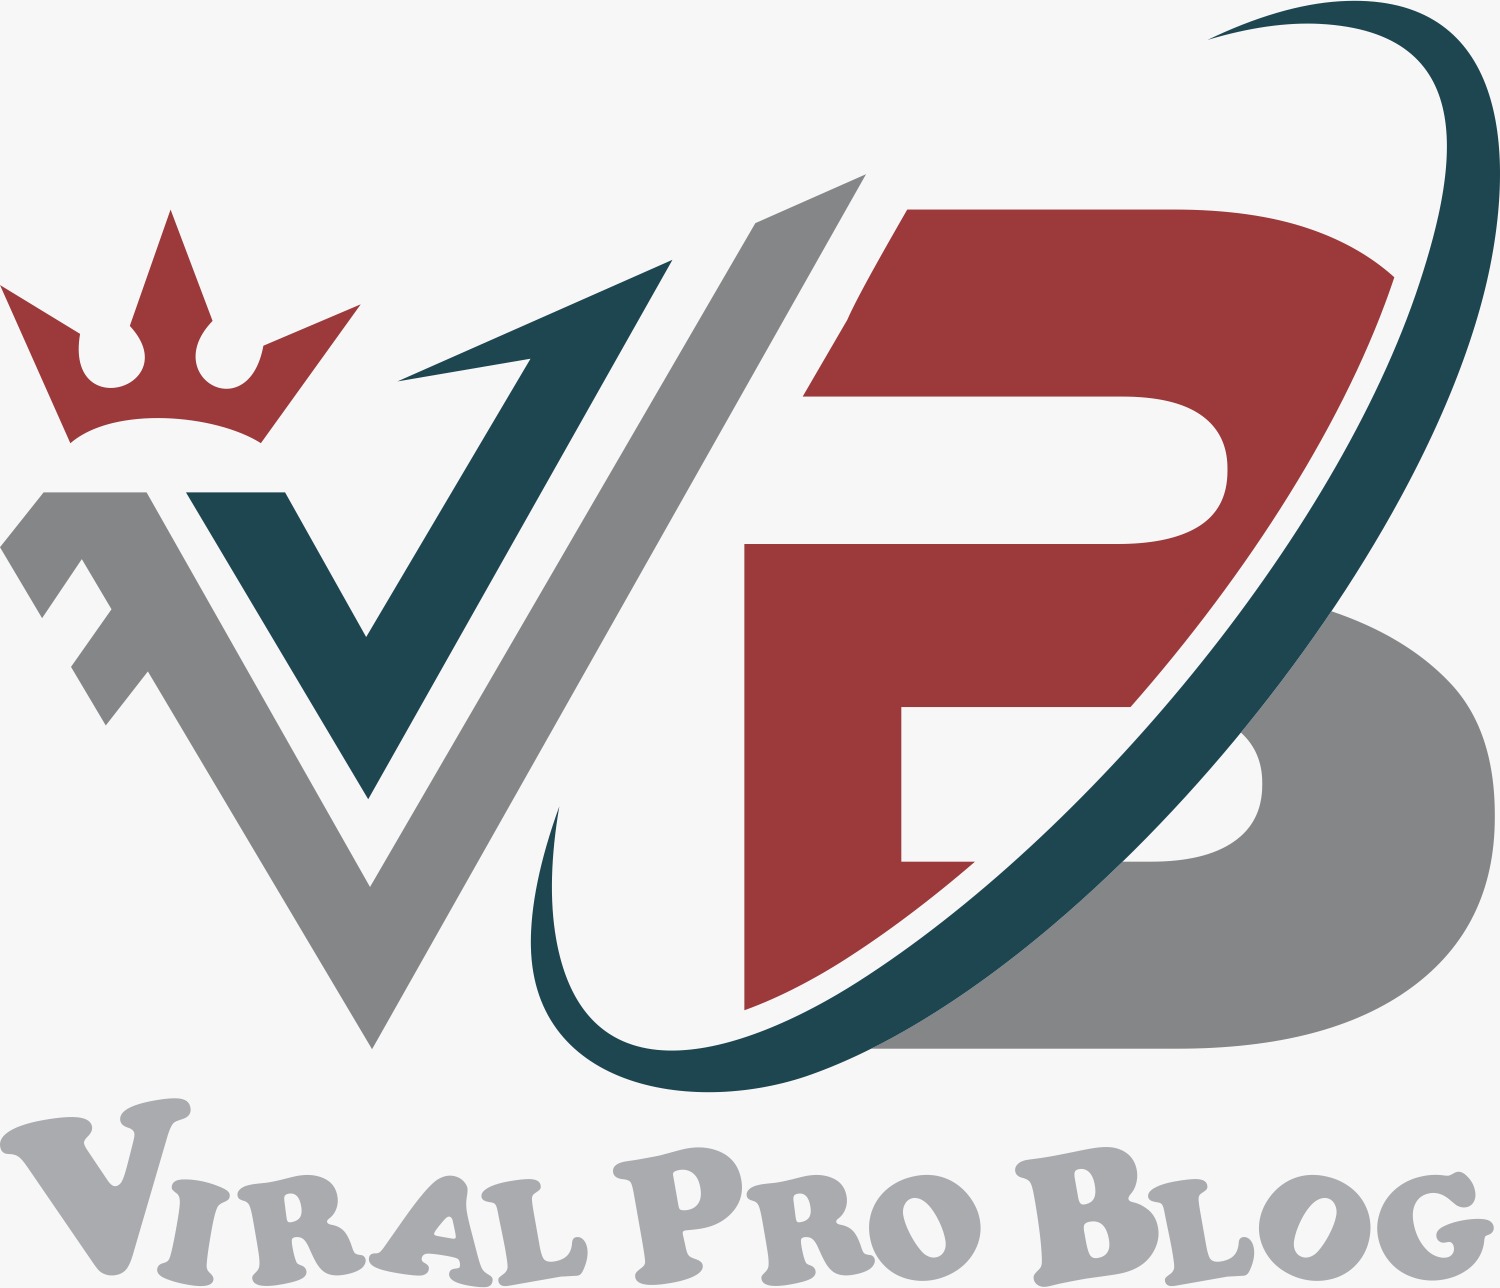 Viral Pro Blog